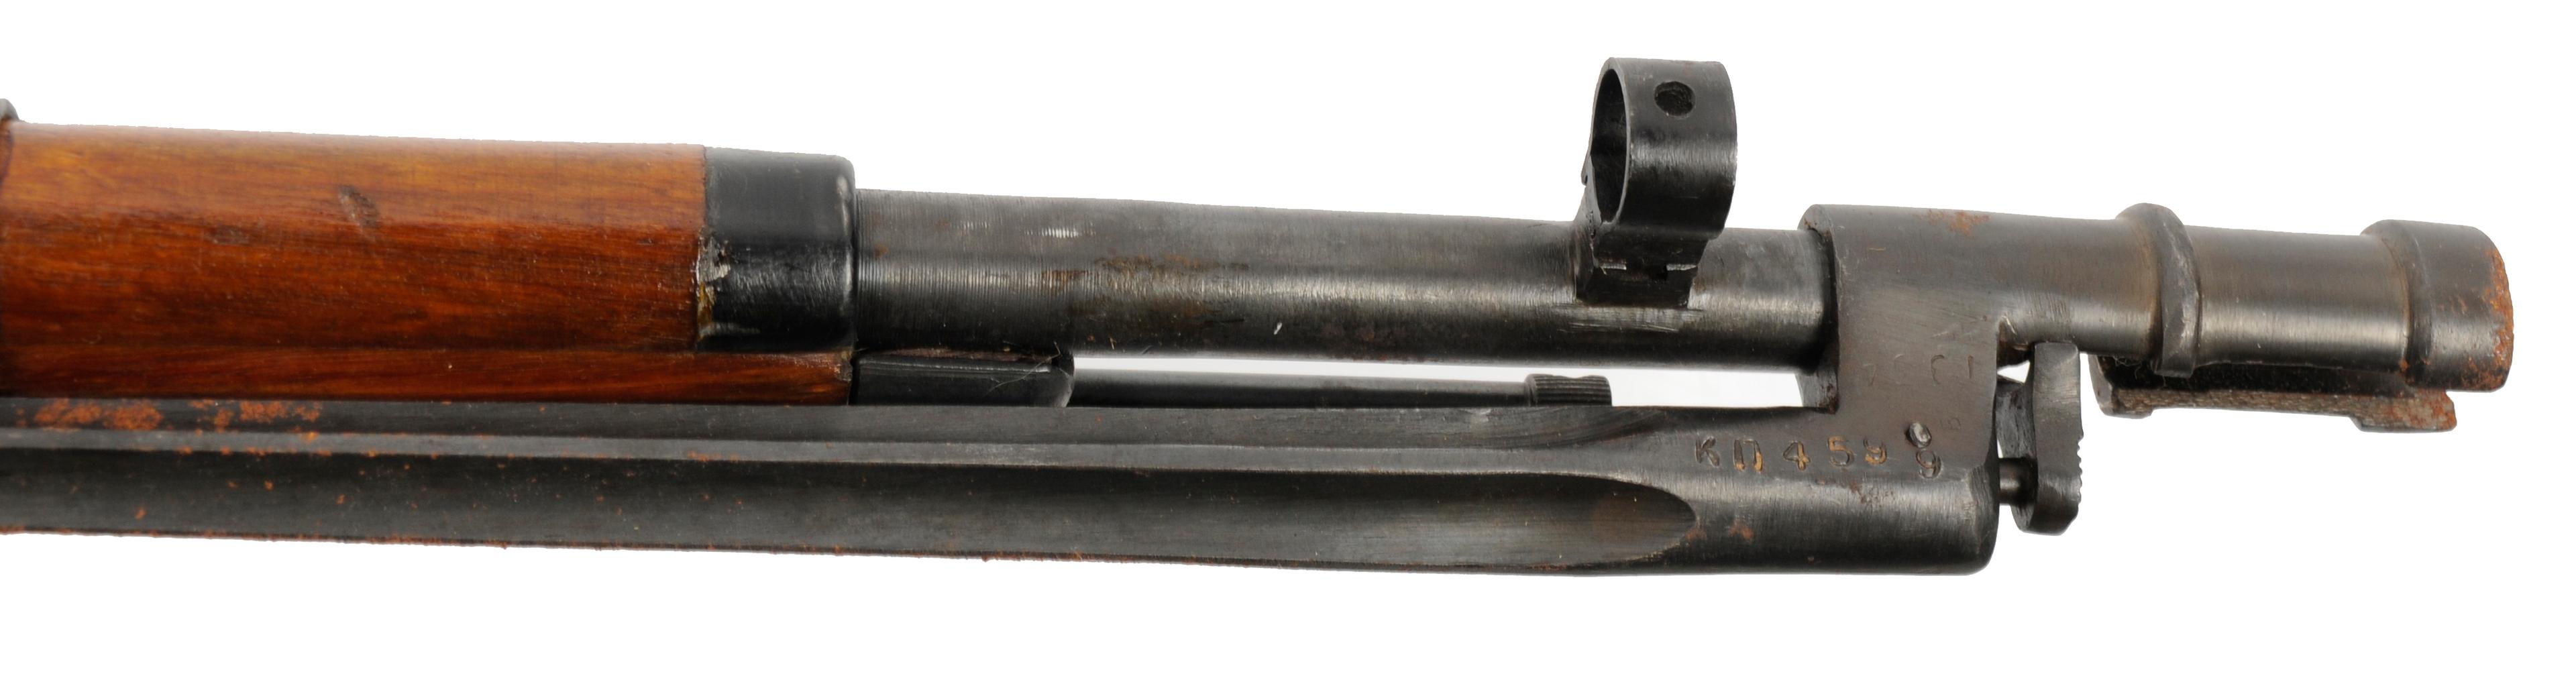 Soviet Military WWII era 91/30 7.62x54r Mosin-Nagant Bolt-Action Rifle - FFL # 9130230116 (LRX 1)